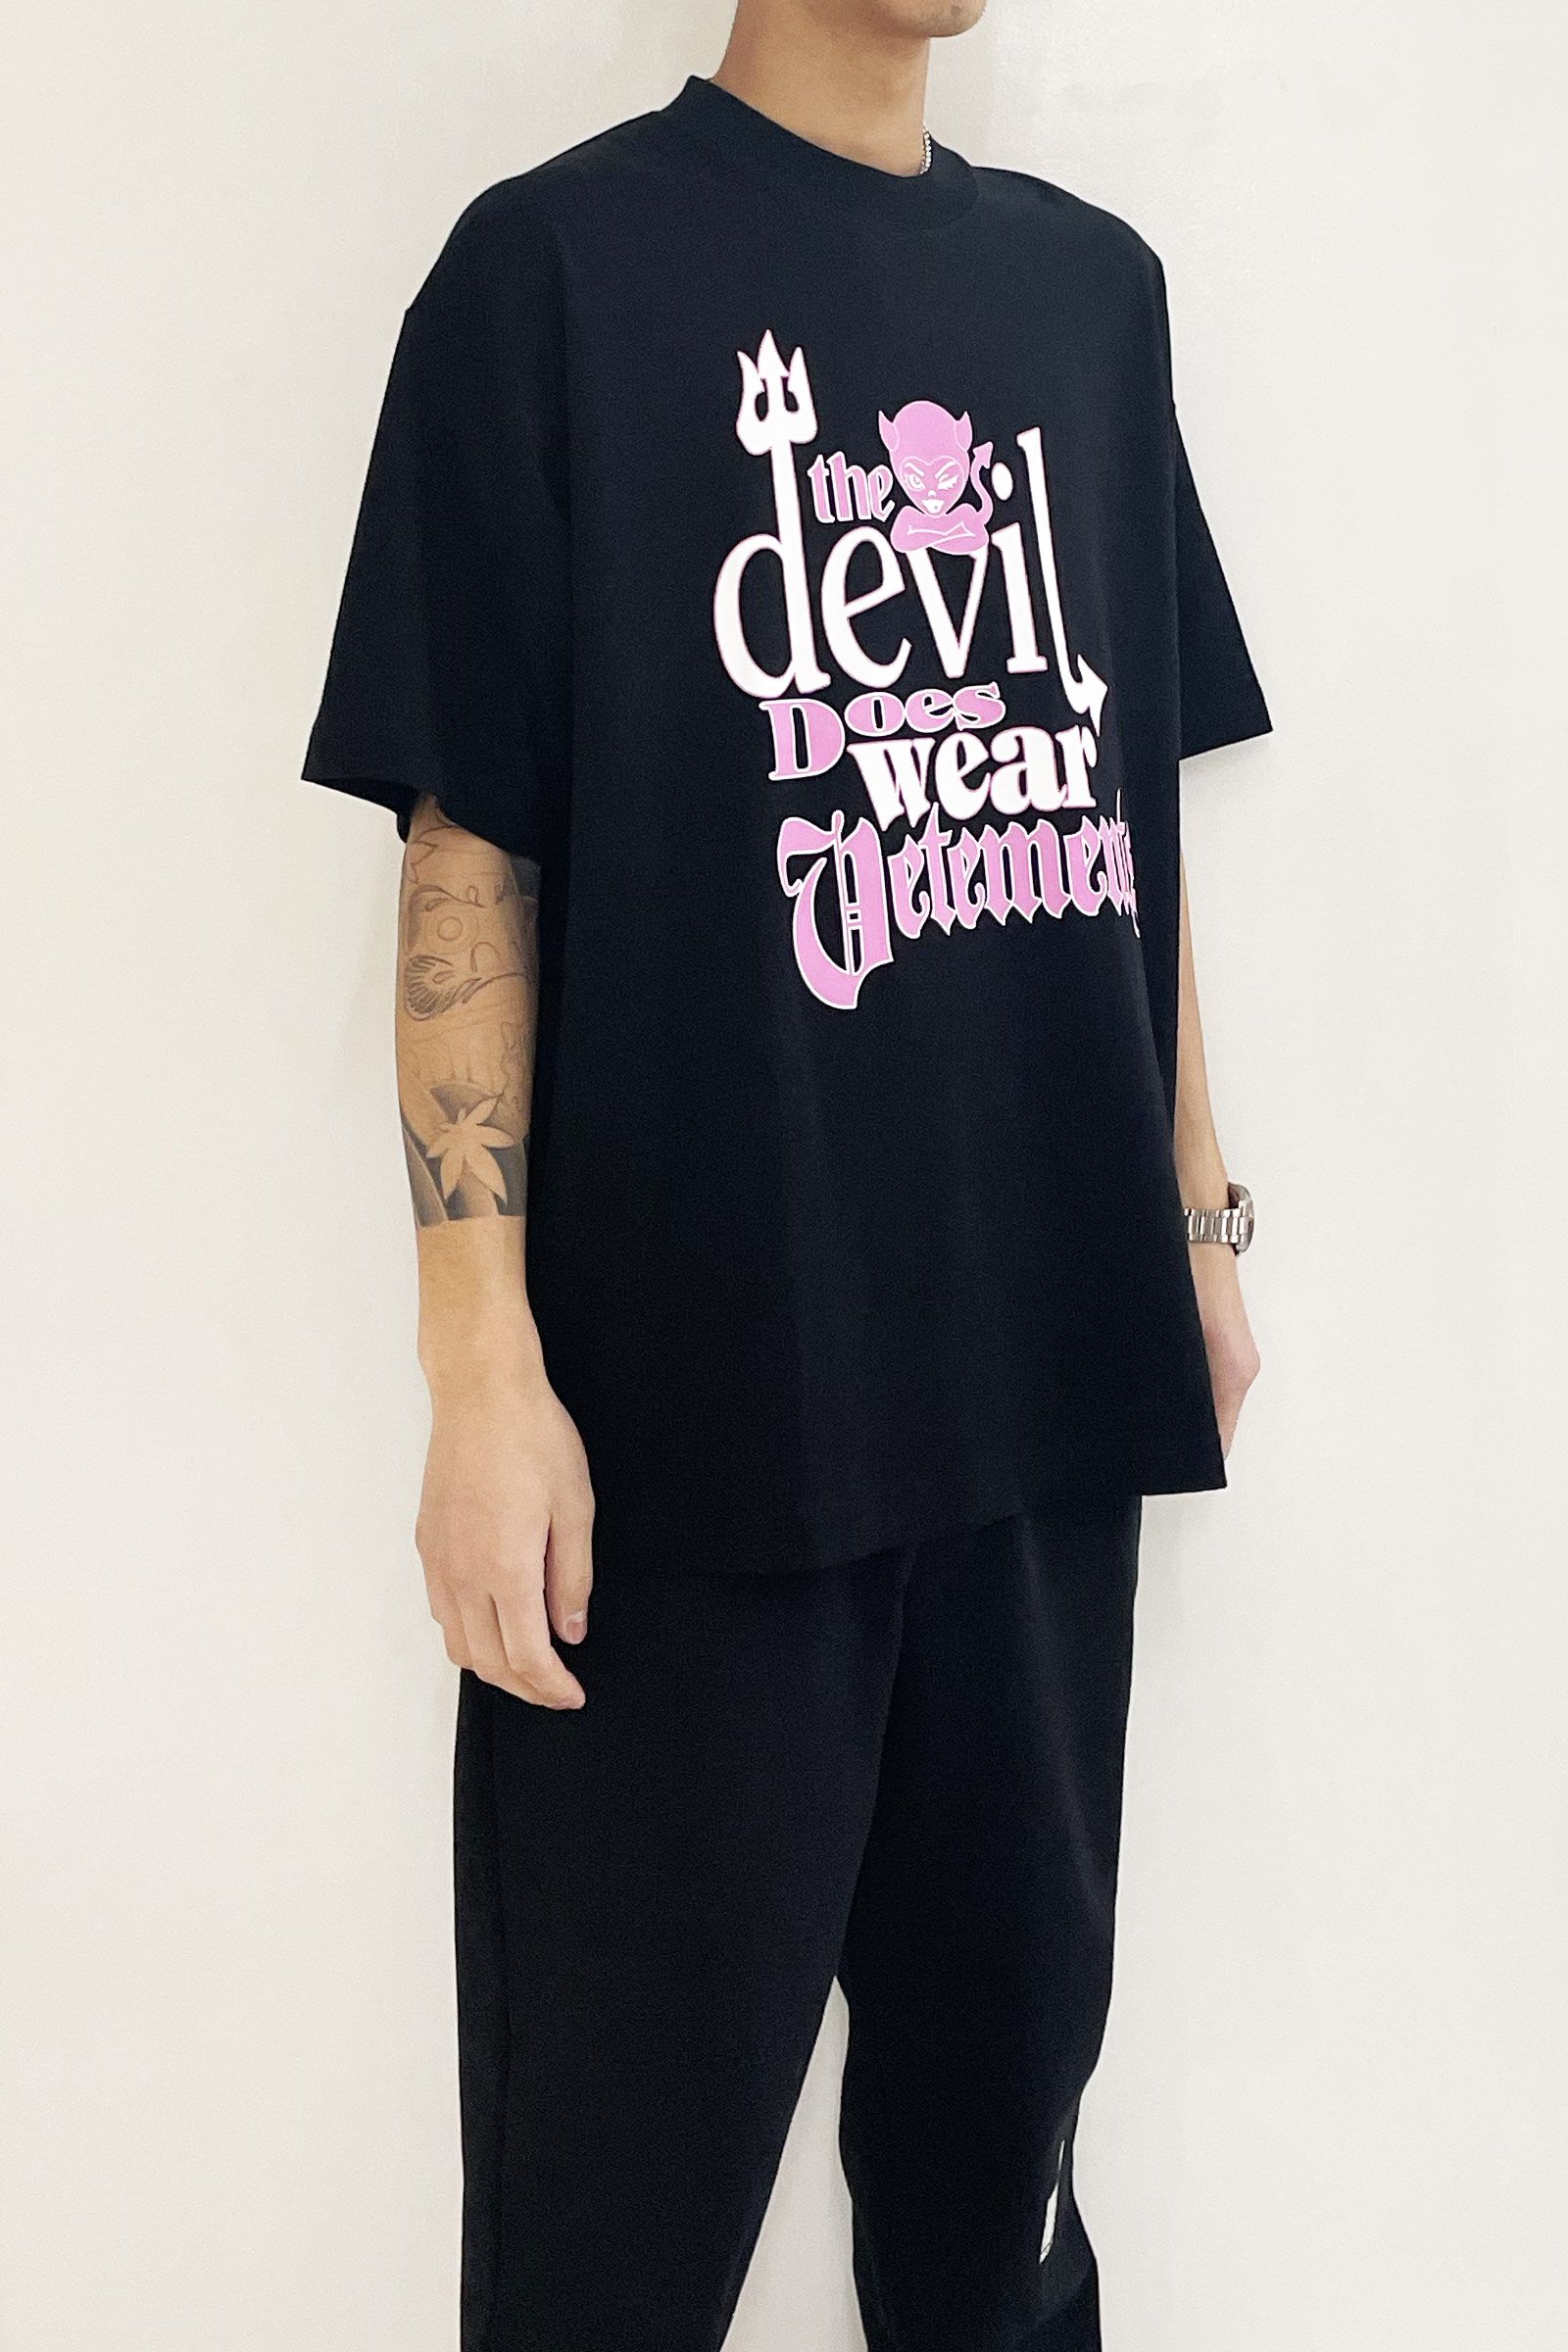 Devil does wear vetements T-shirt - XS